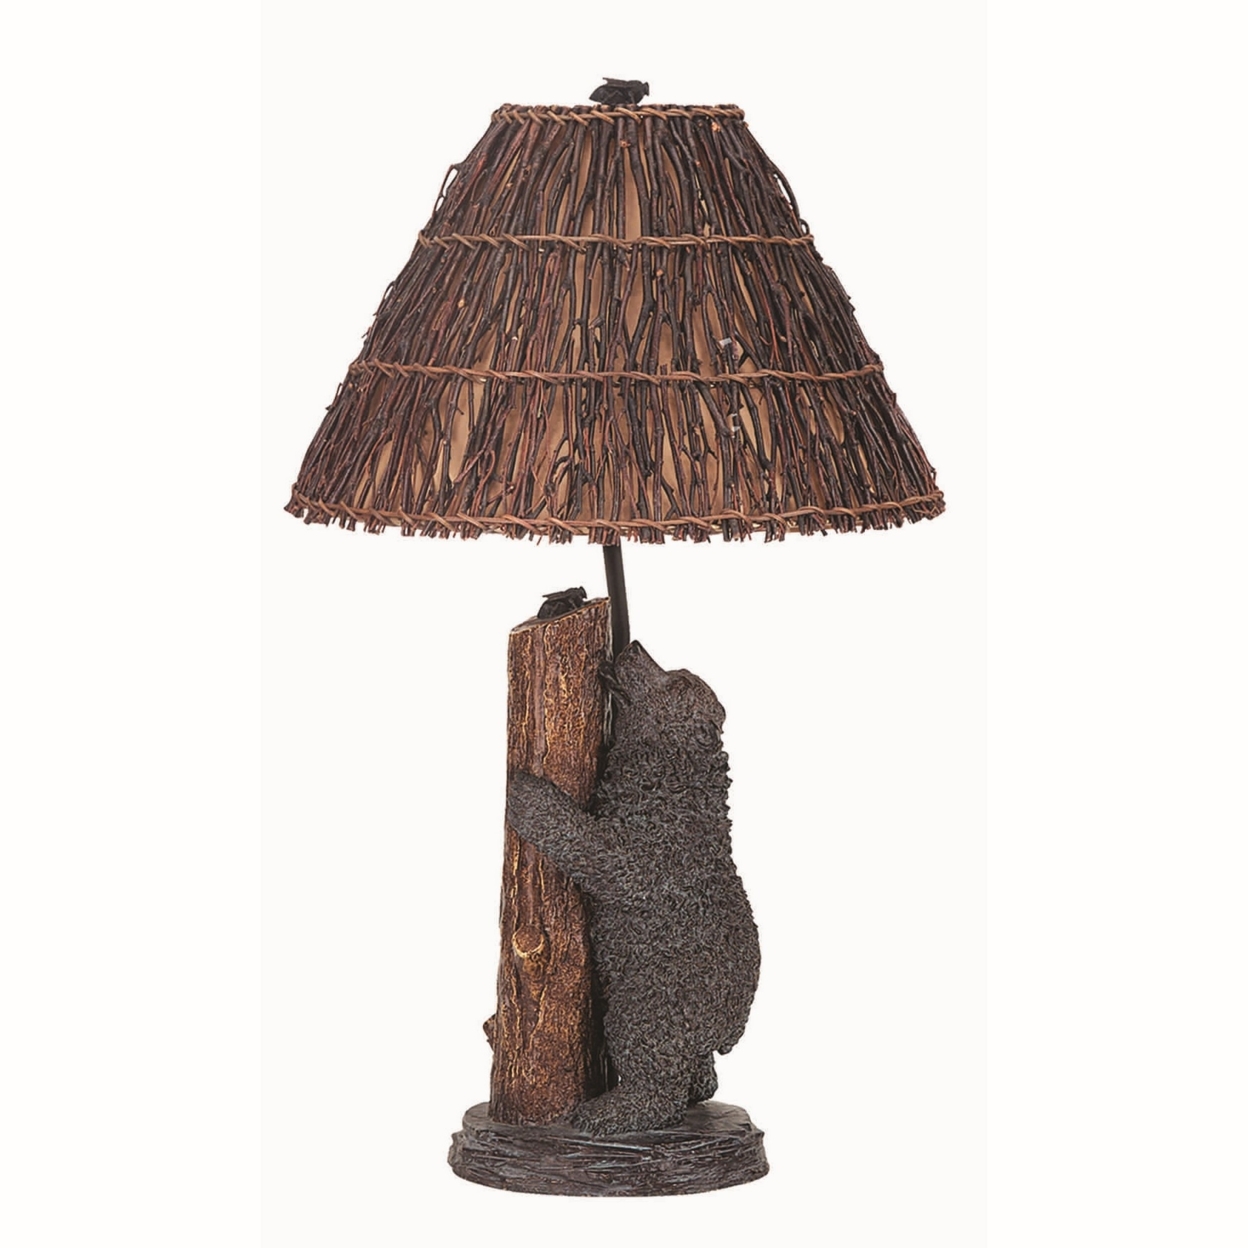 150 Watt Resin Bear Body Table Lamp With Twig Shade, Gray And Brown- Saltoro Sherpi